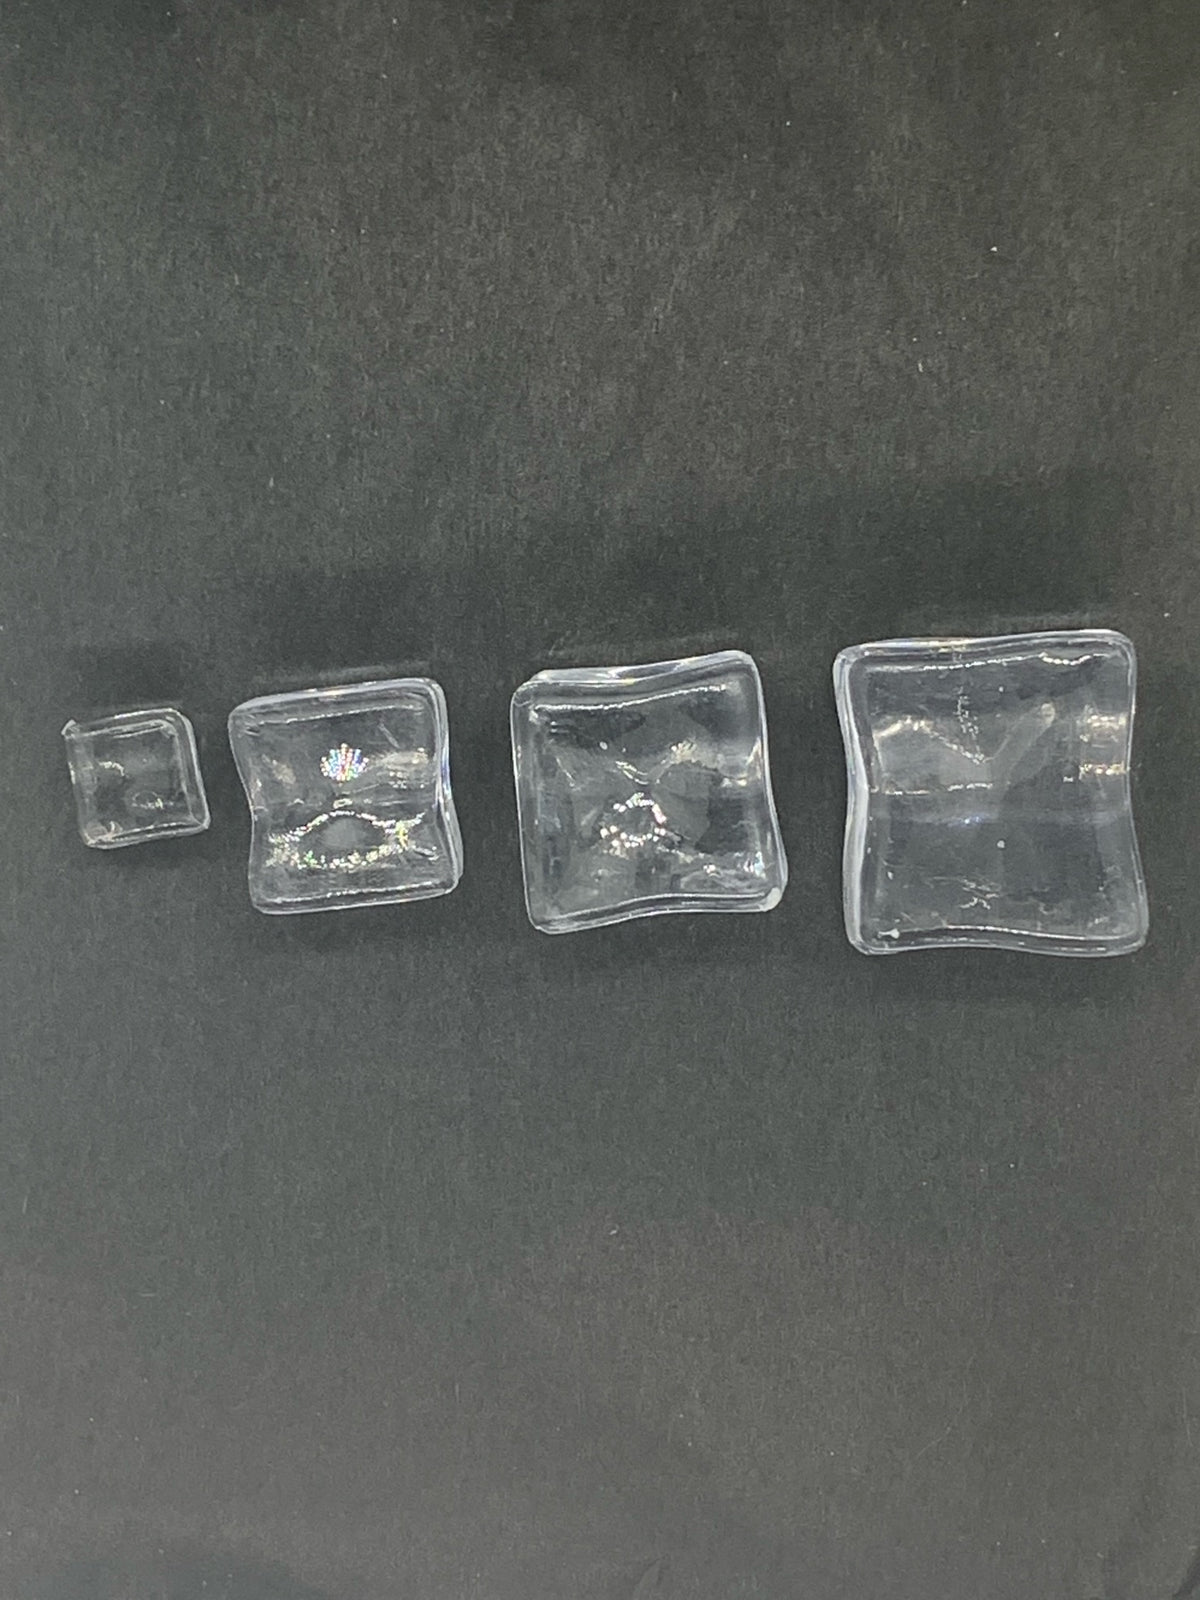 10mm Ice Cubes